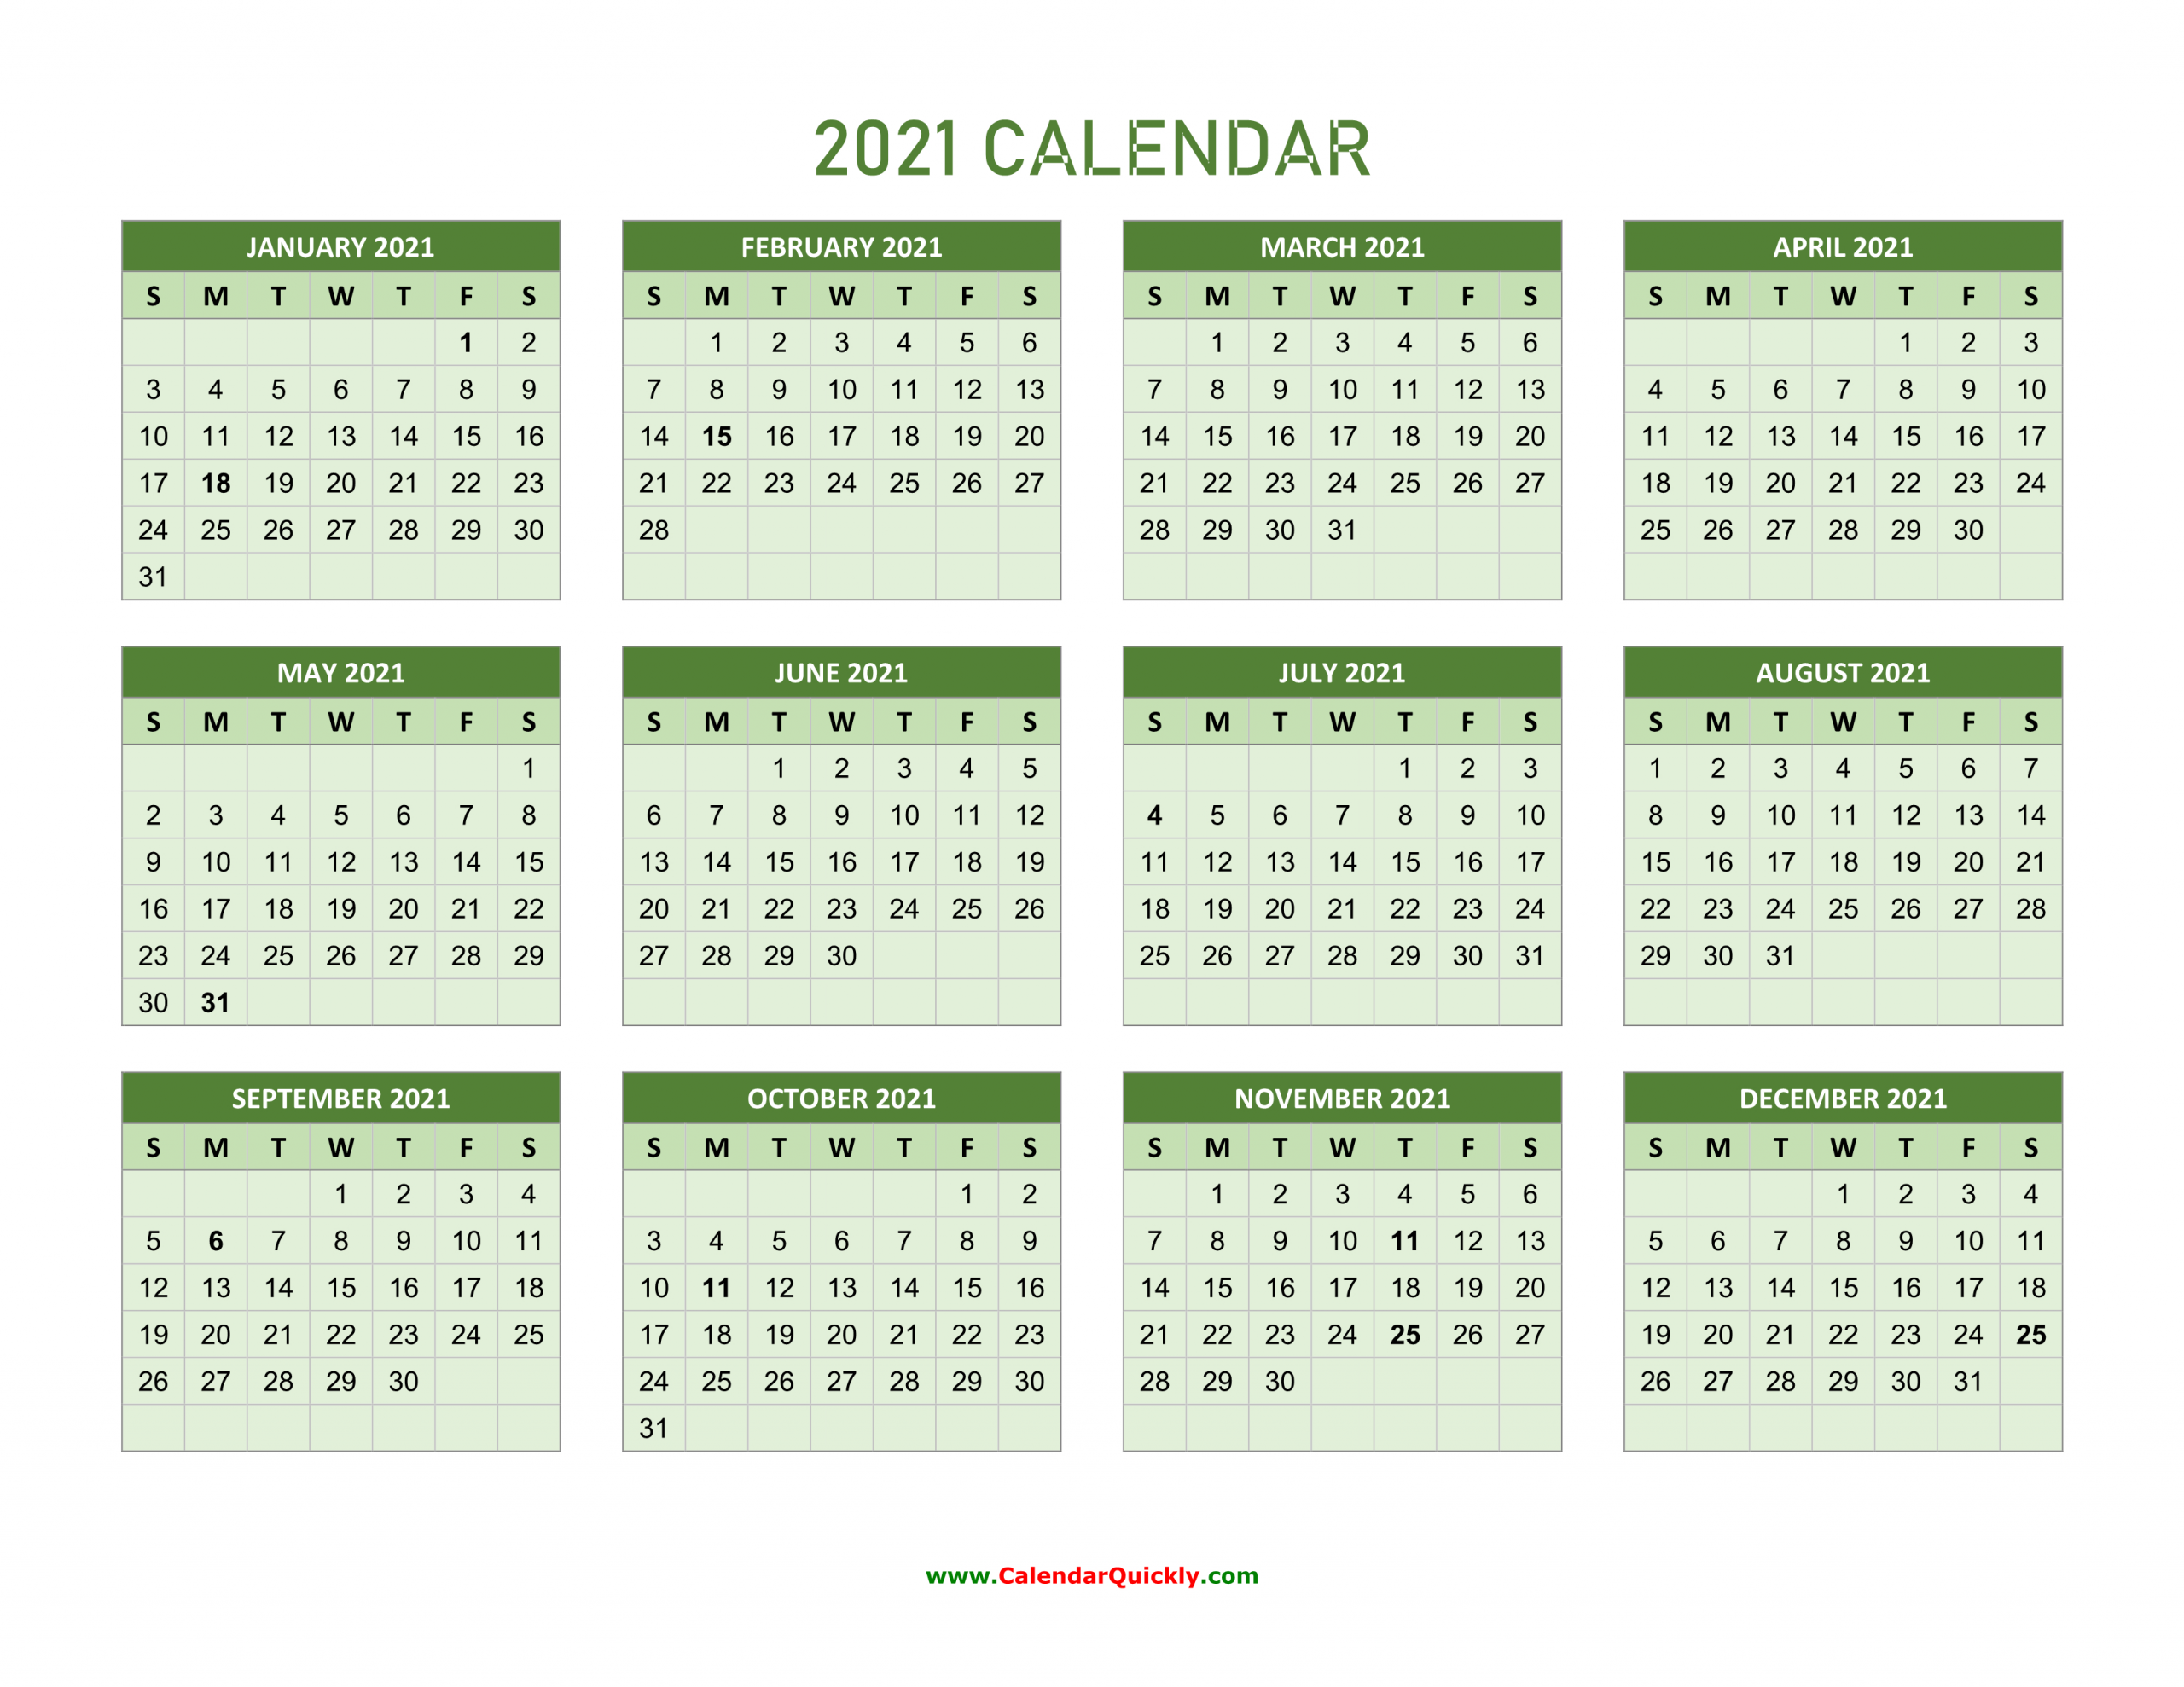 yearly calendar 2021 calendar quickly